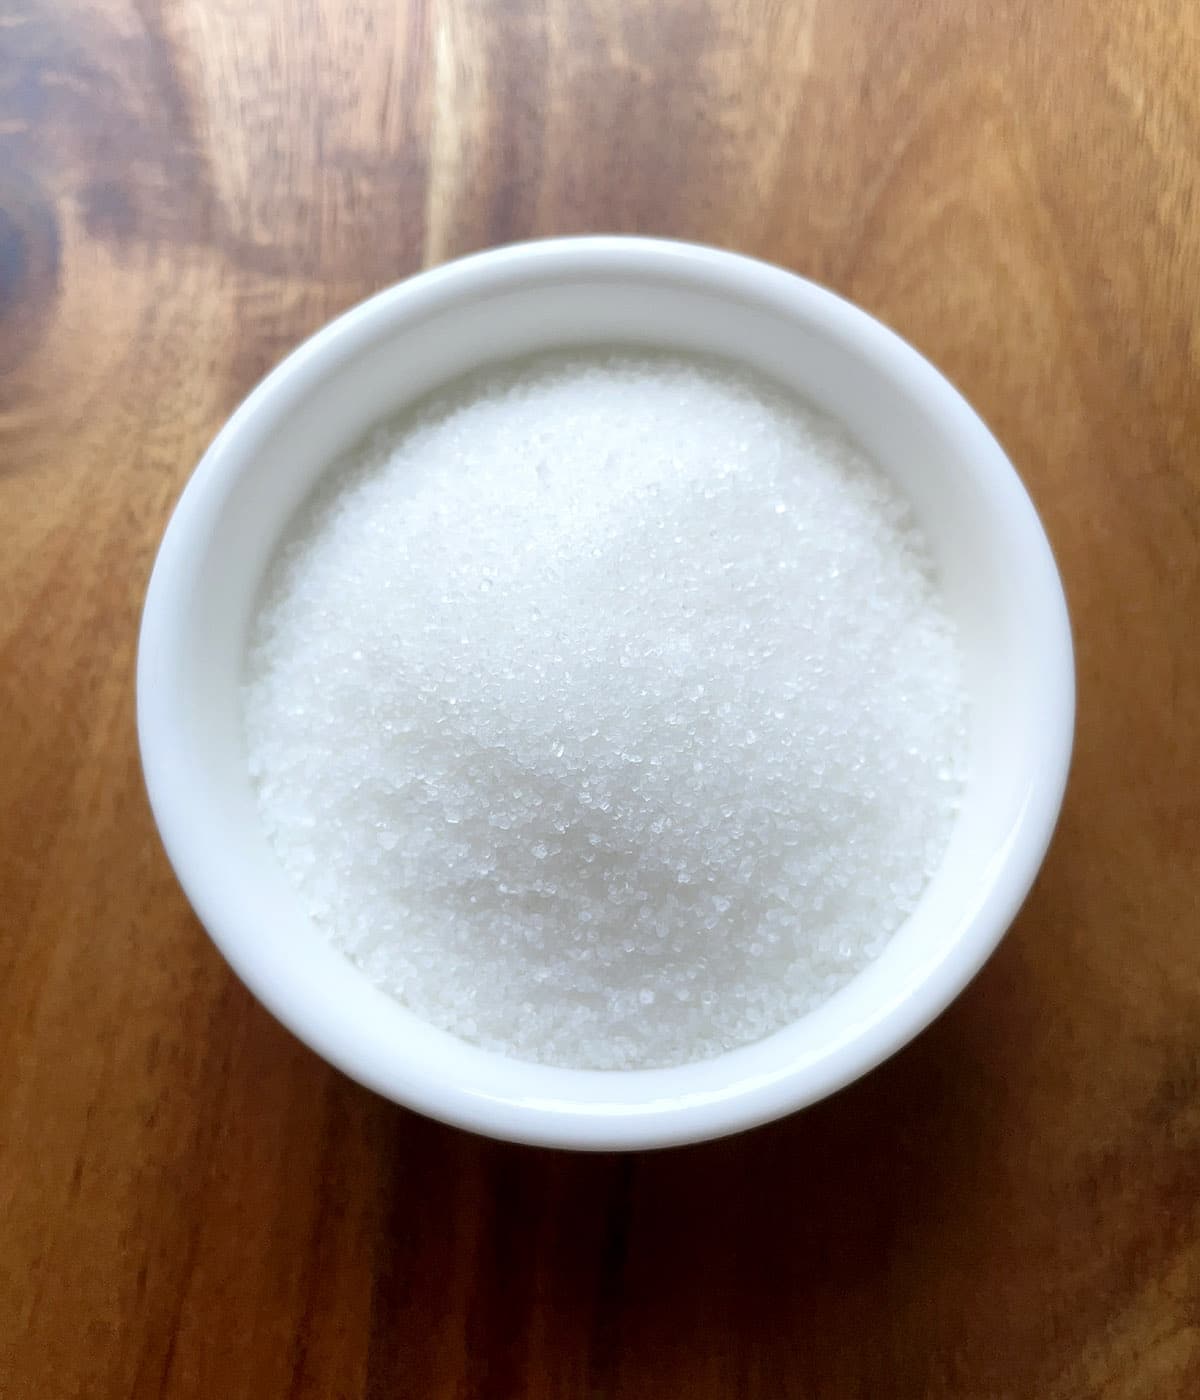 A round white dish containing white sugar.